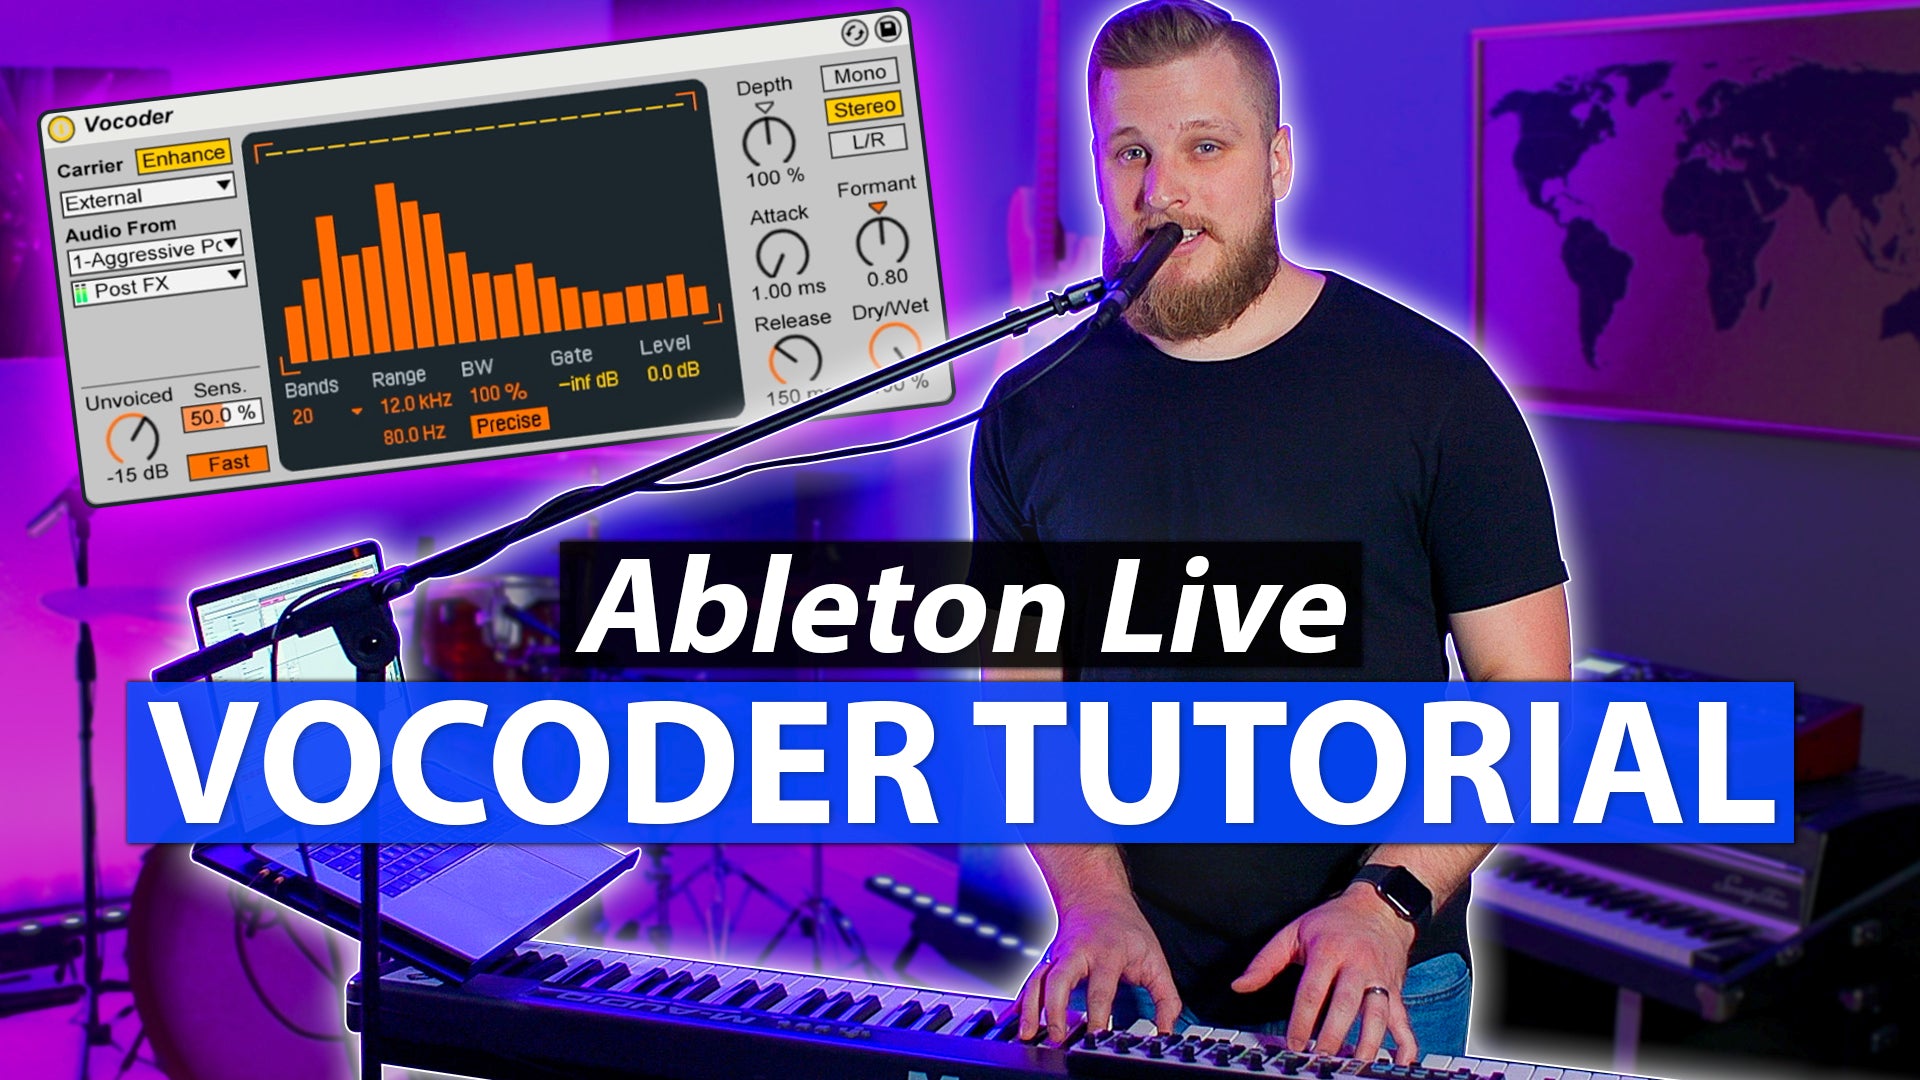 Ableton Tutorial: How to Use Ableton Live as a Vocoder Tutorial